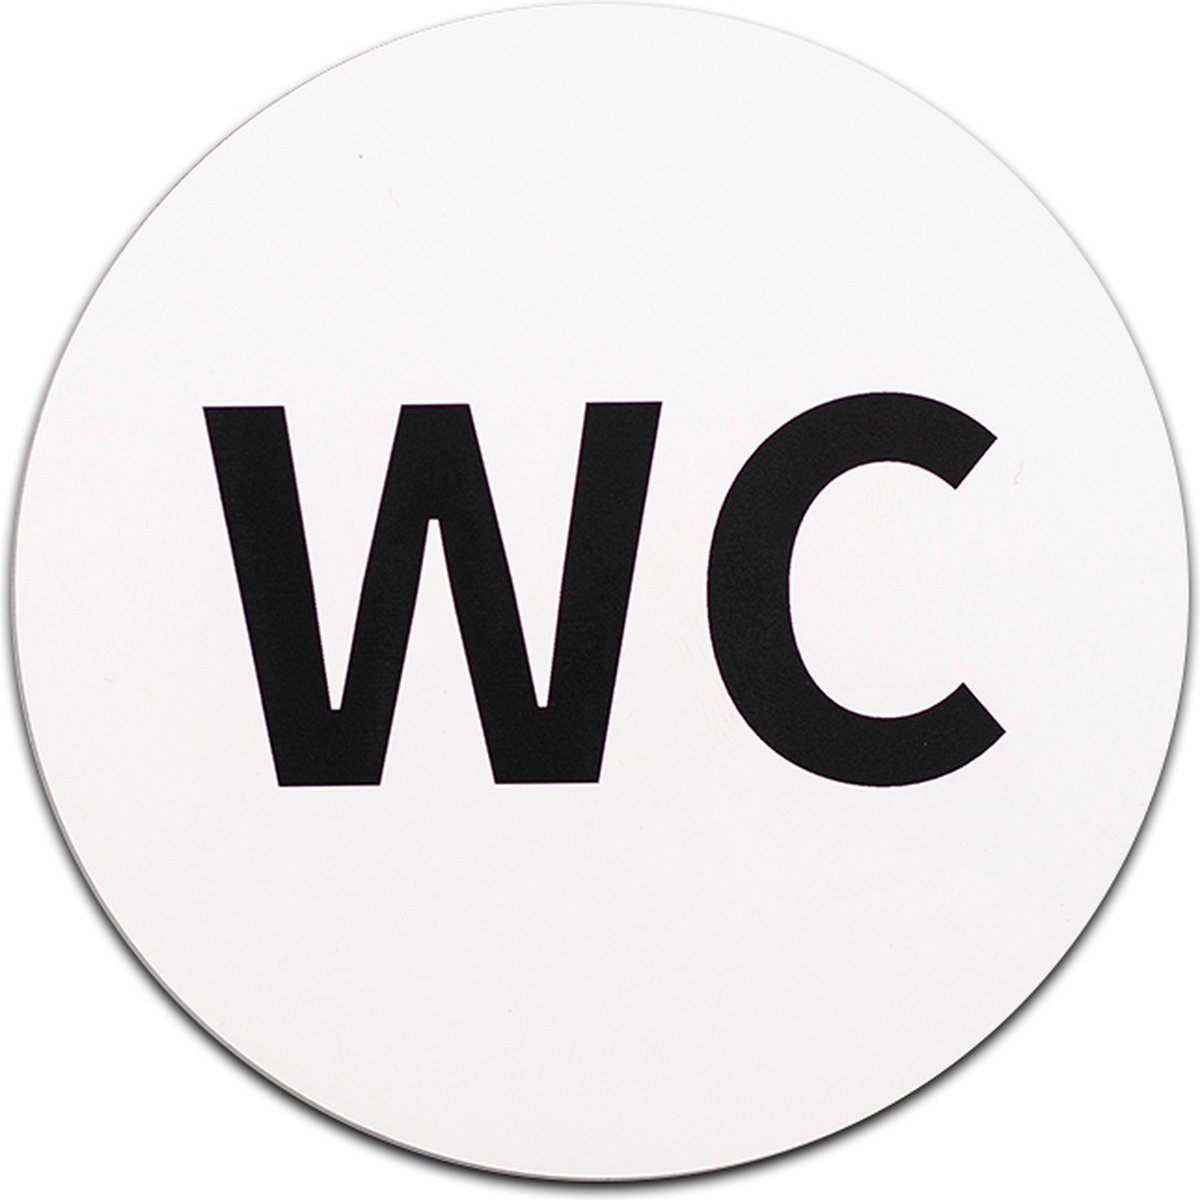 Wc bordje – WC – Rond – Wit met Zwart – 10 x 10 cm - Toilet bordje – Deurbord – Zelfklevend